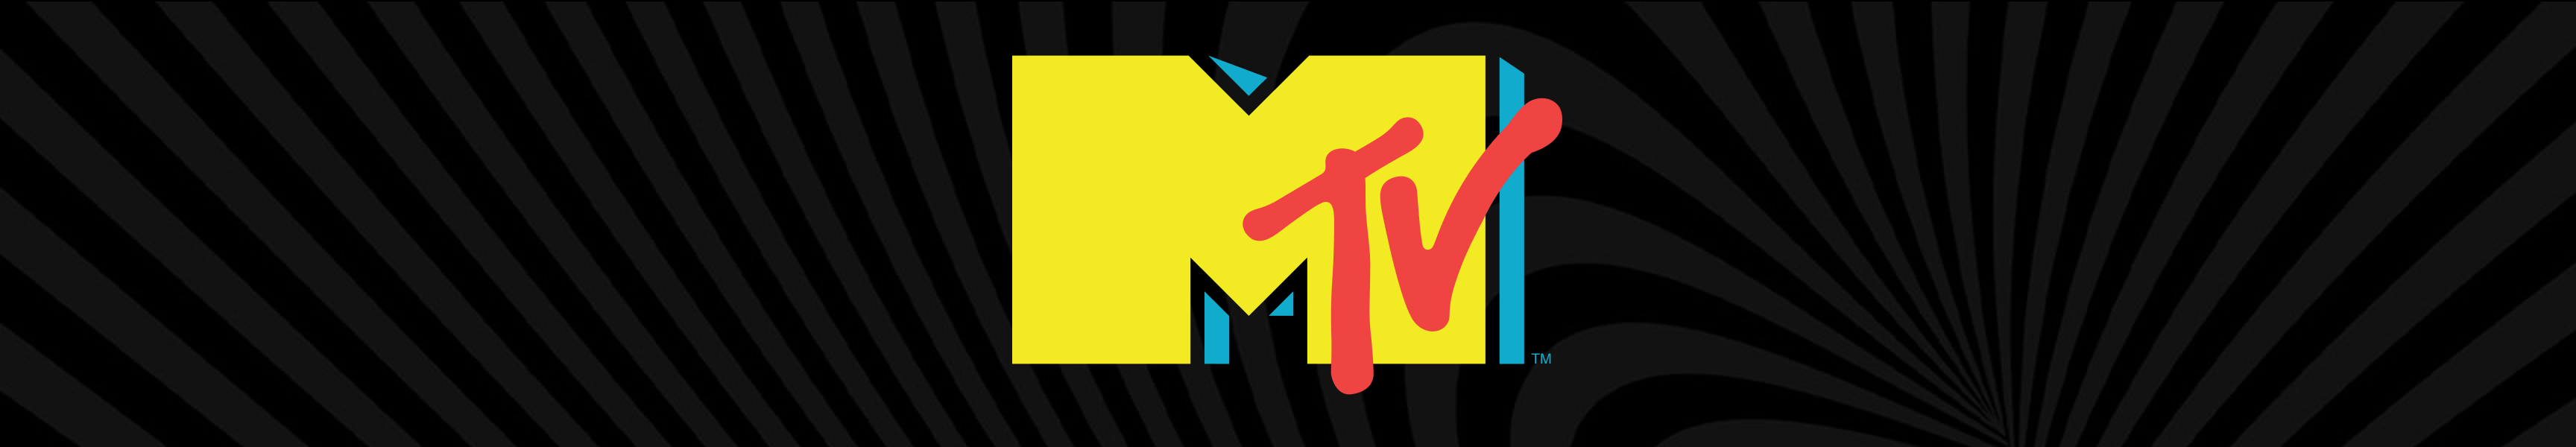 Topas de recortes de MTV